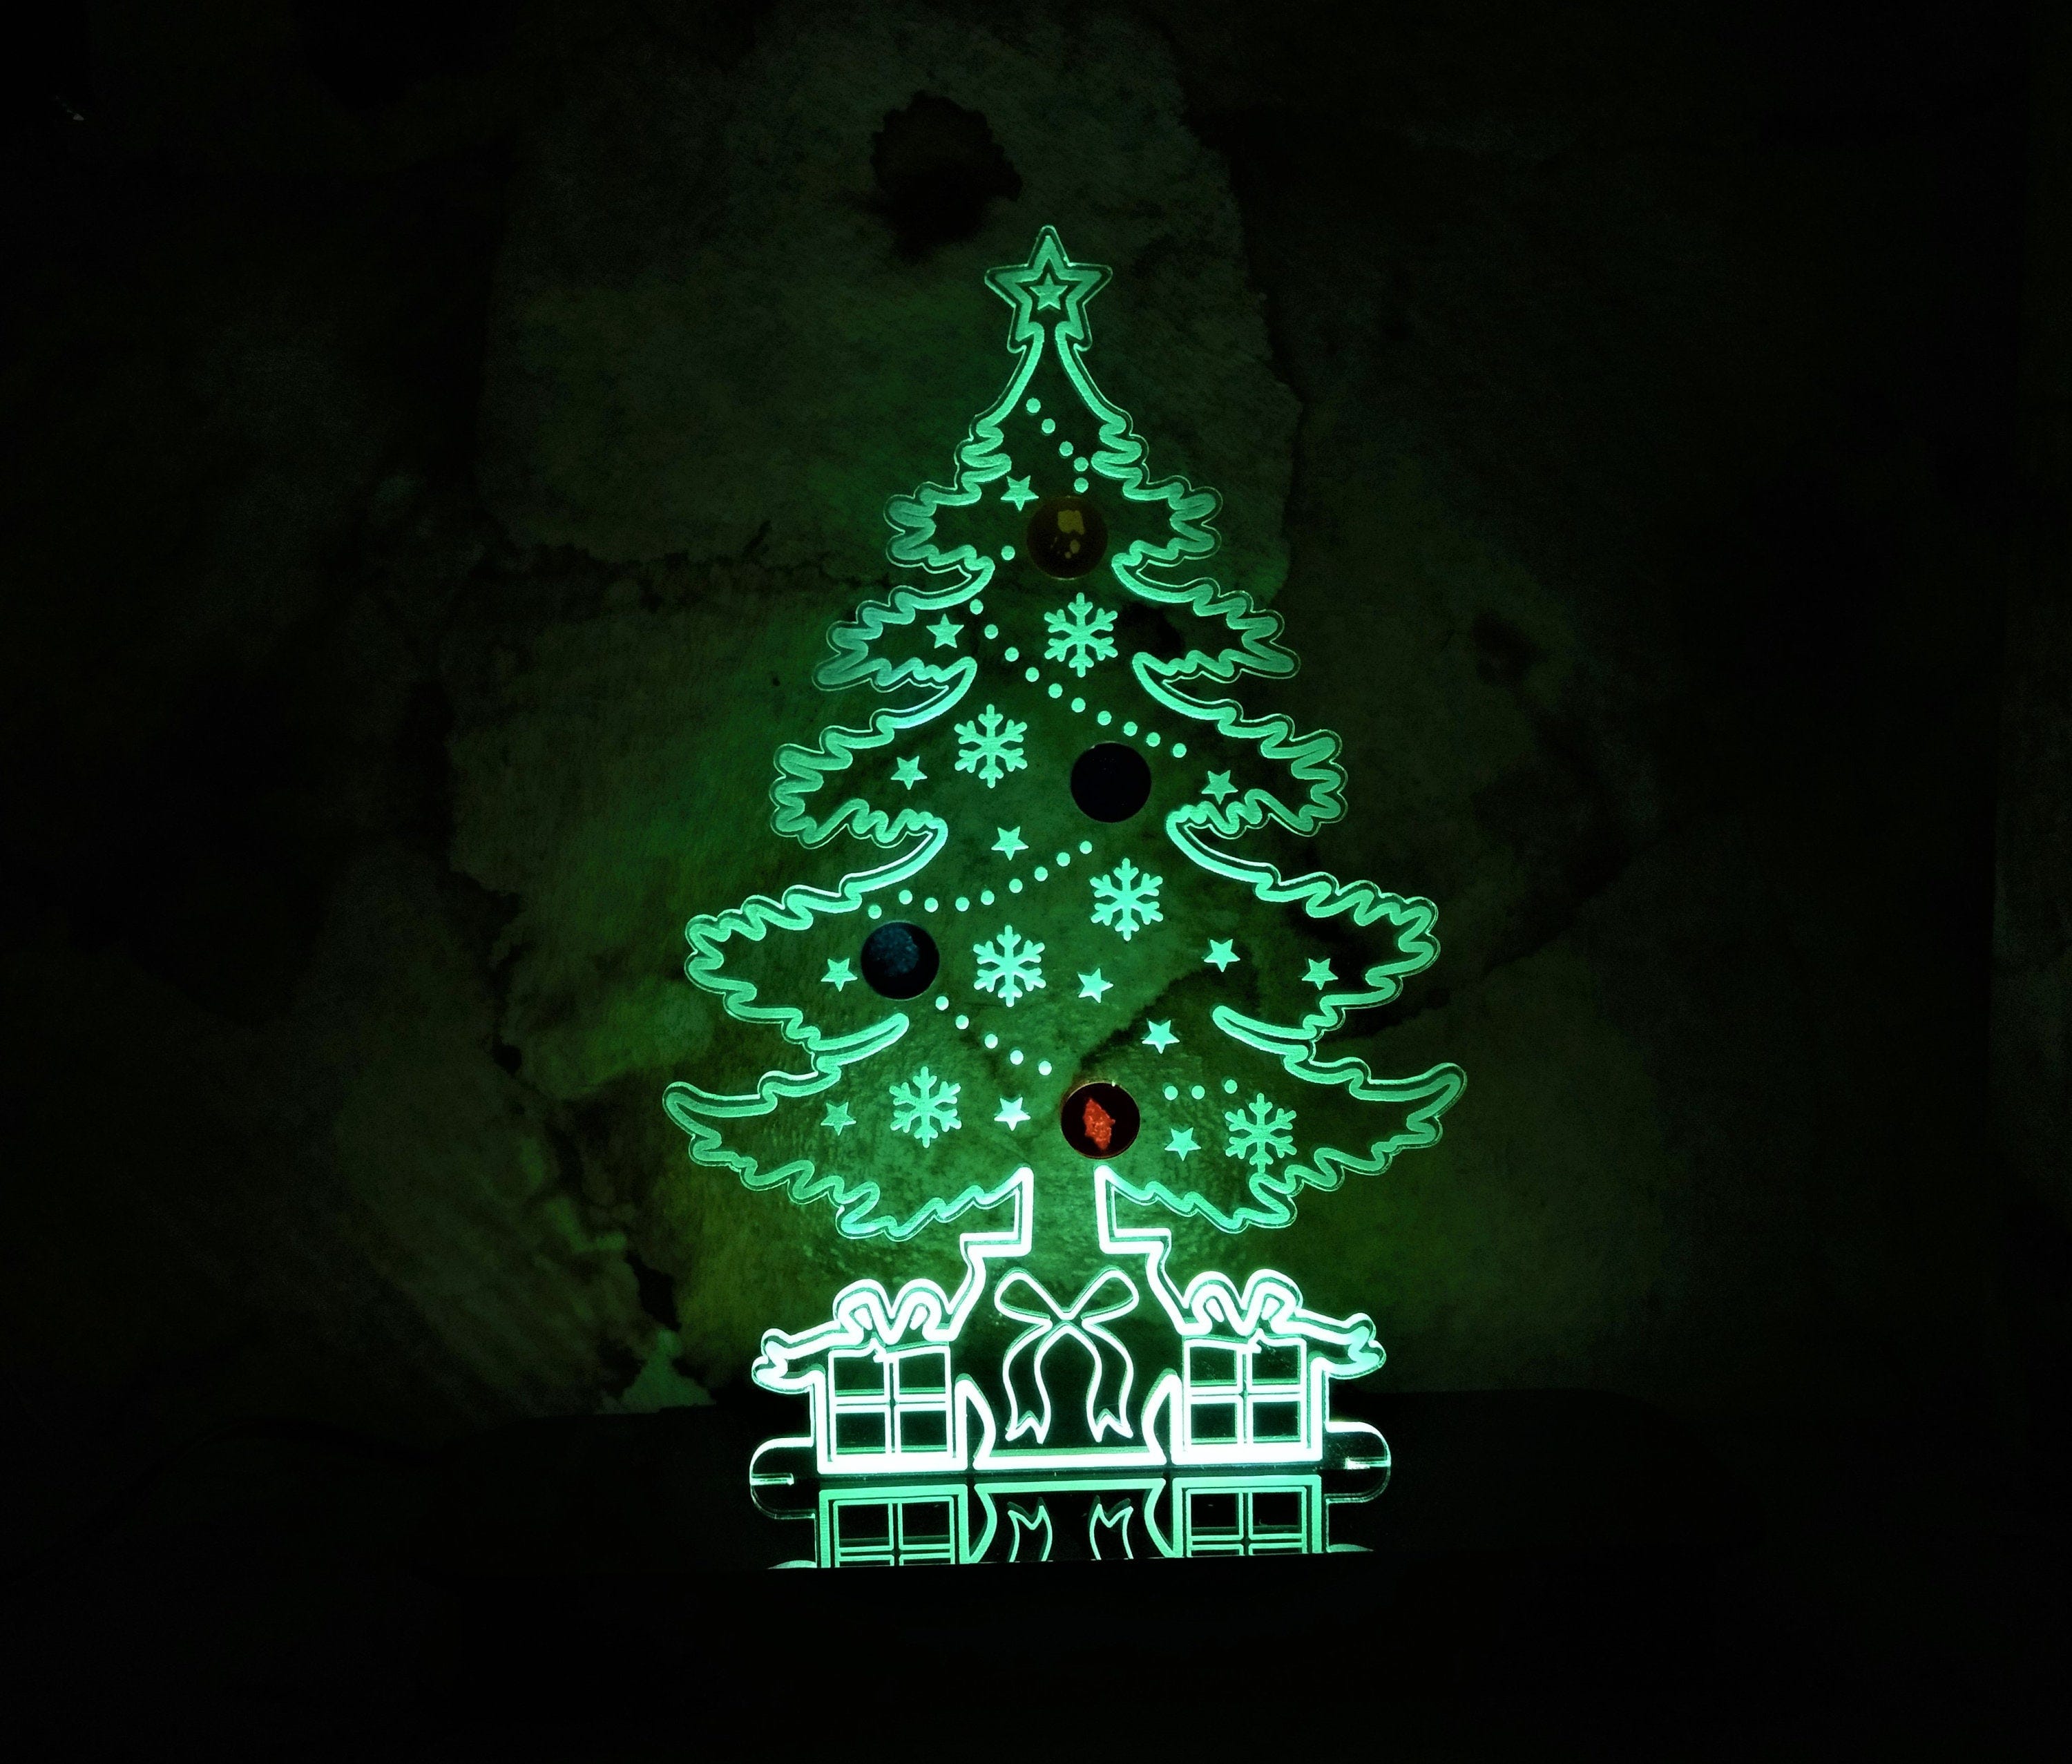 Christmas tree acrylic led lamp digital files dxf,cdr,svg,eps,ai Home Decor,laser cut files,cnc router, vector template,3D, xmas, santa